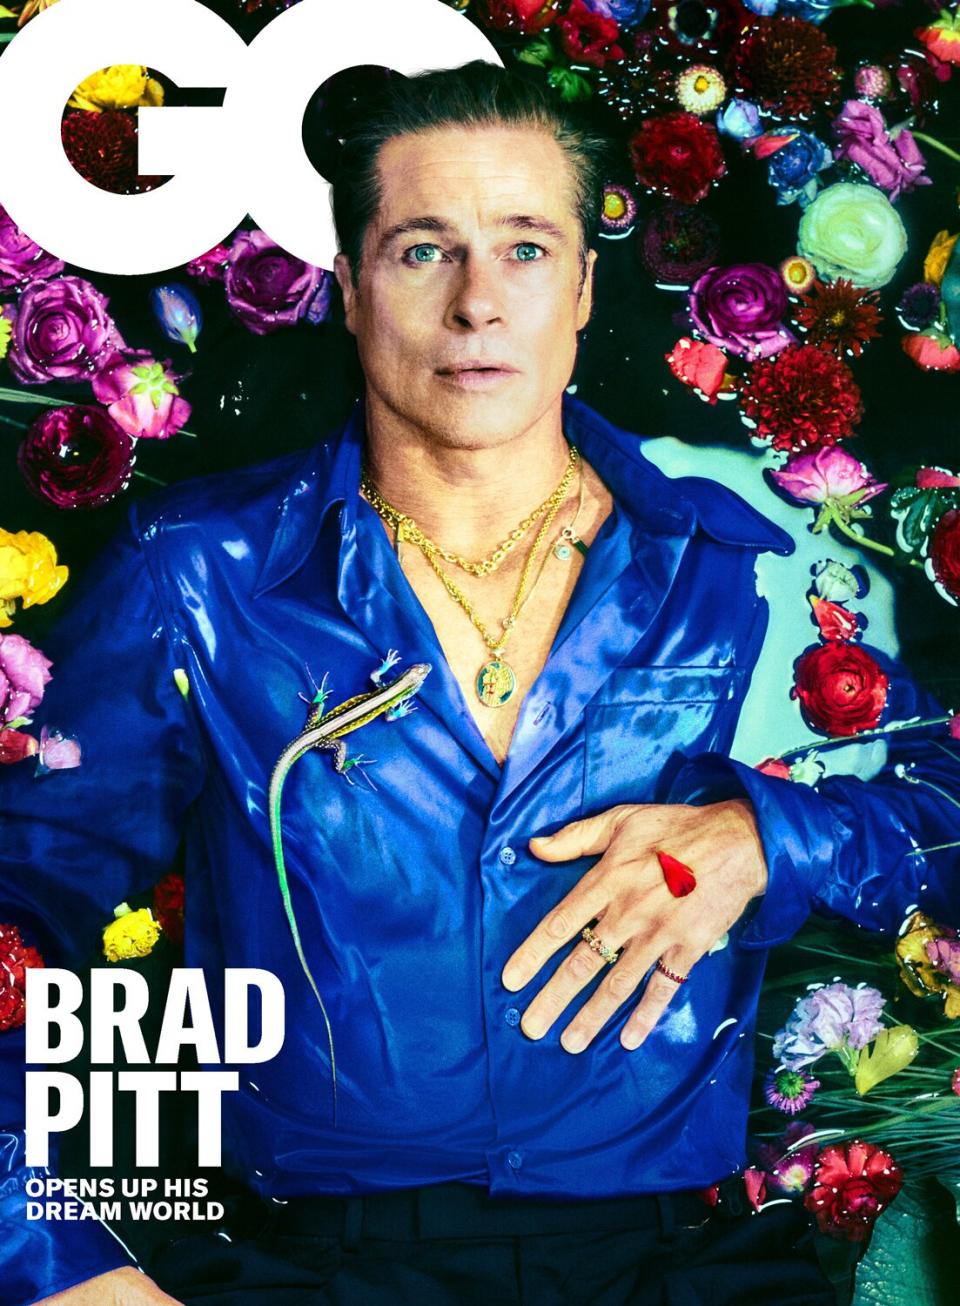 Brad Bitt GQ Cover